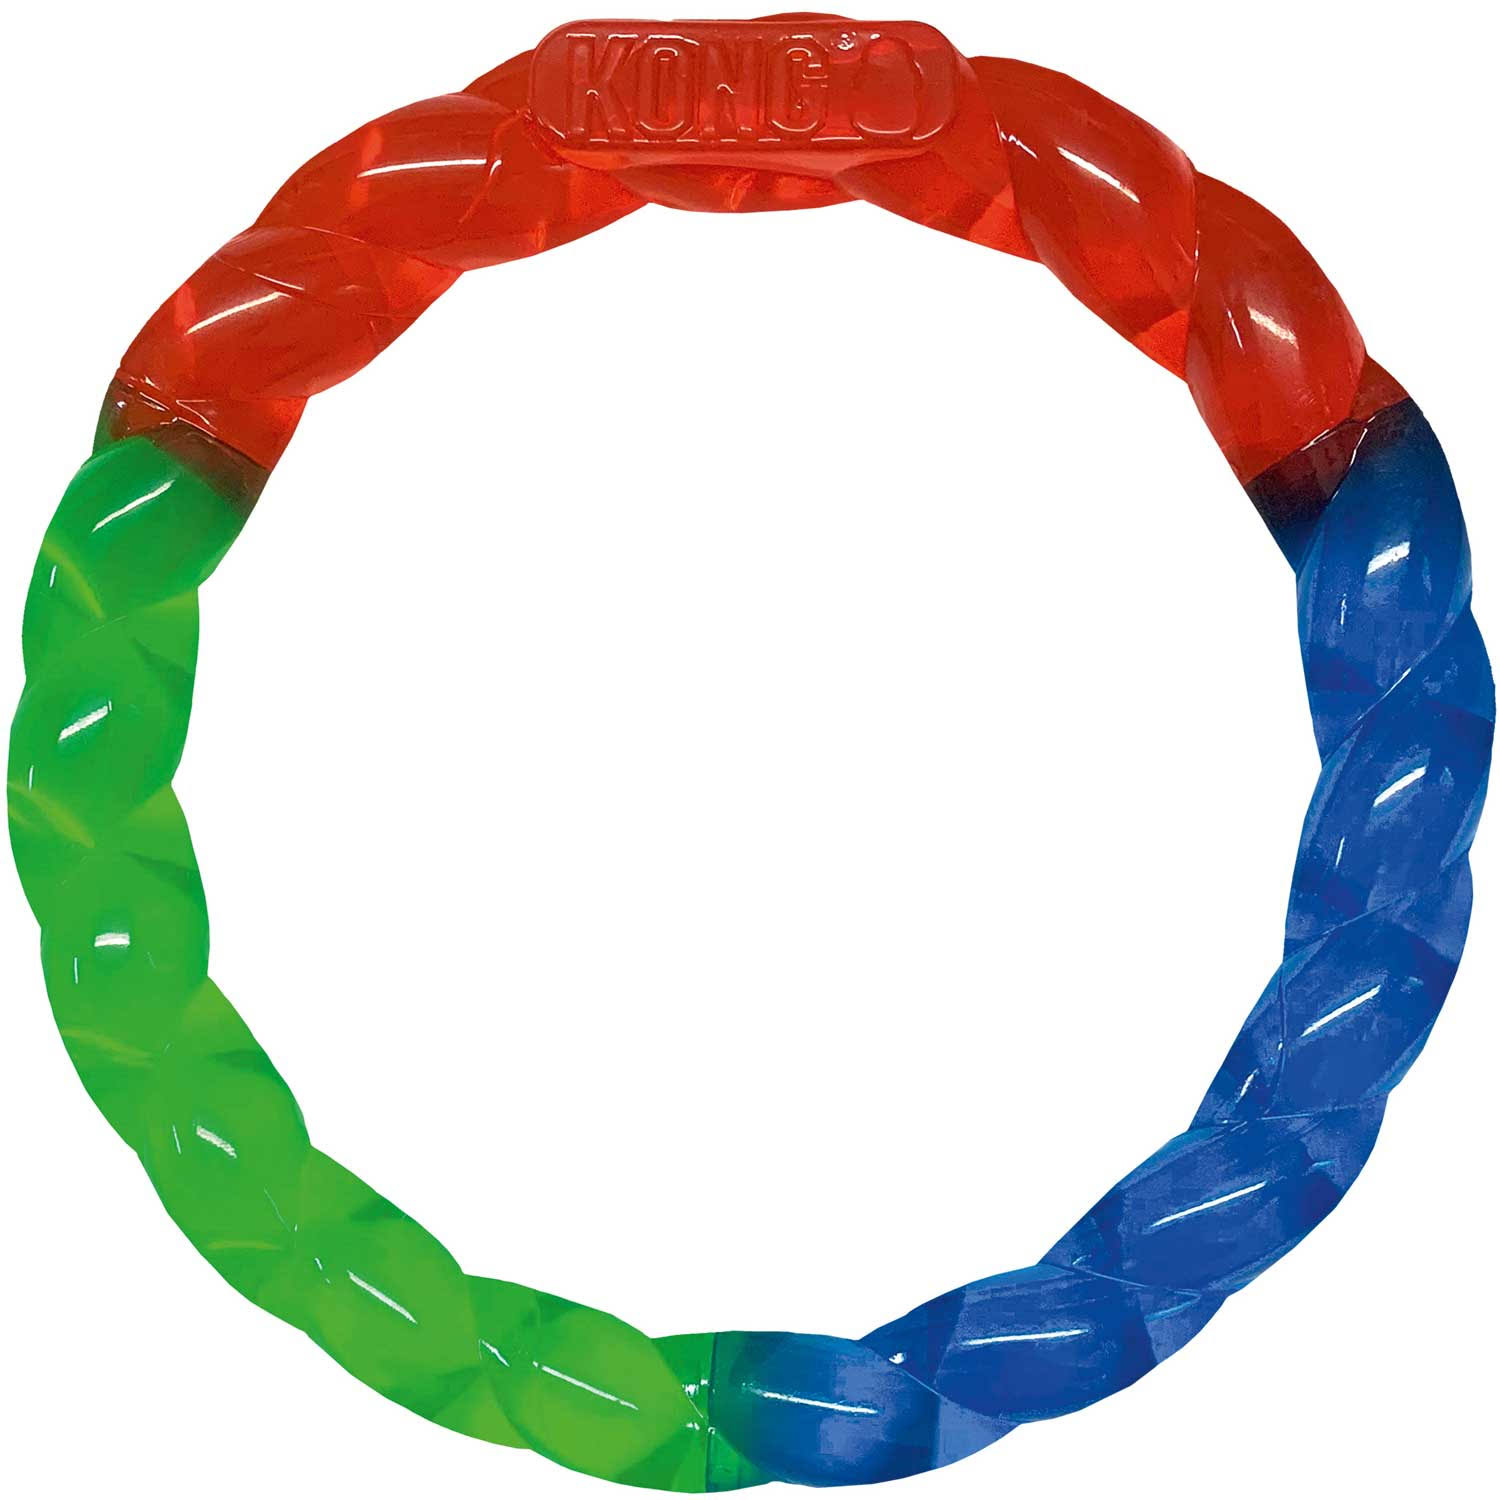 KONG Twistz Ring Dog Toy - Red Green Blue